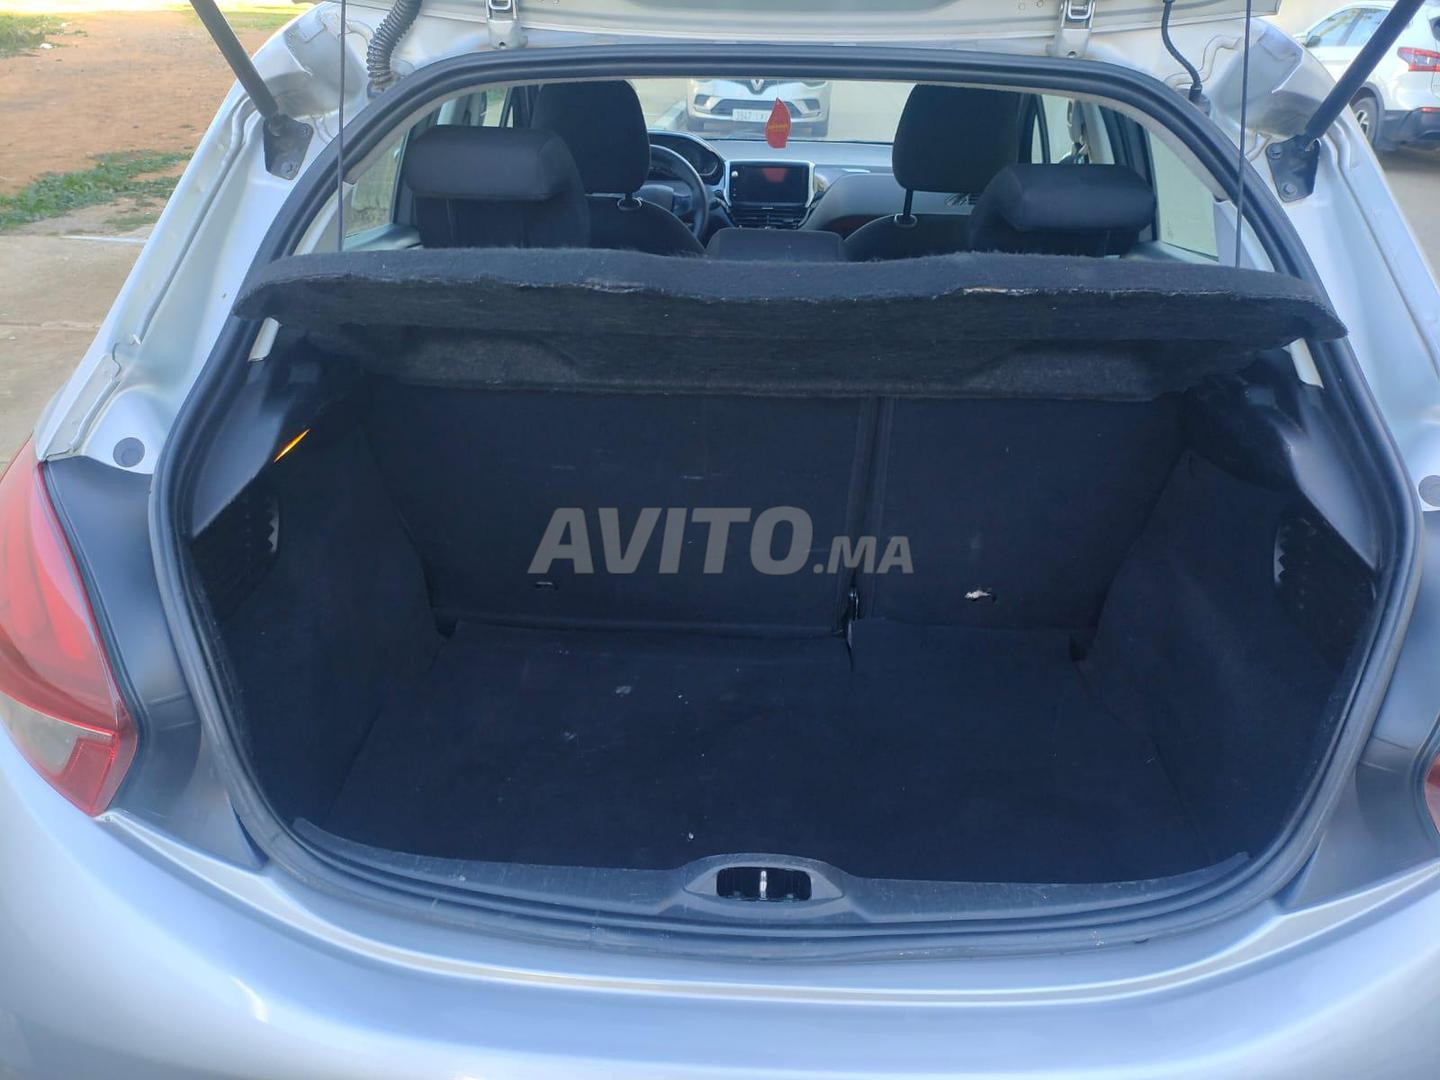 Peugeot 208 neuf pas cher à vendre, Avito Maroc